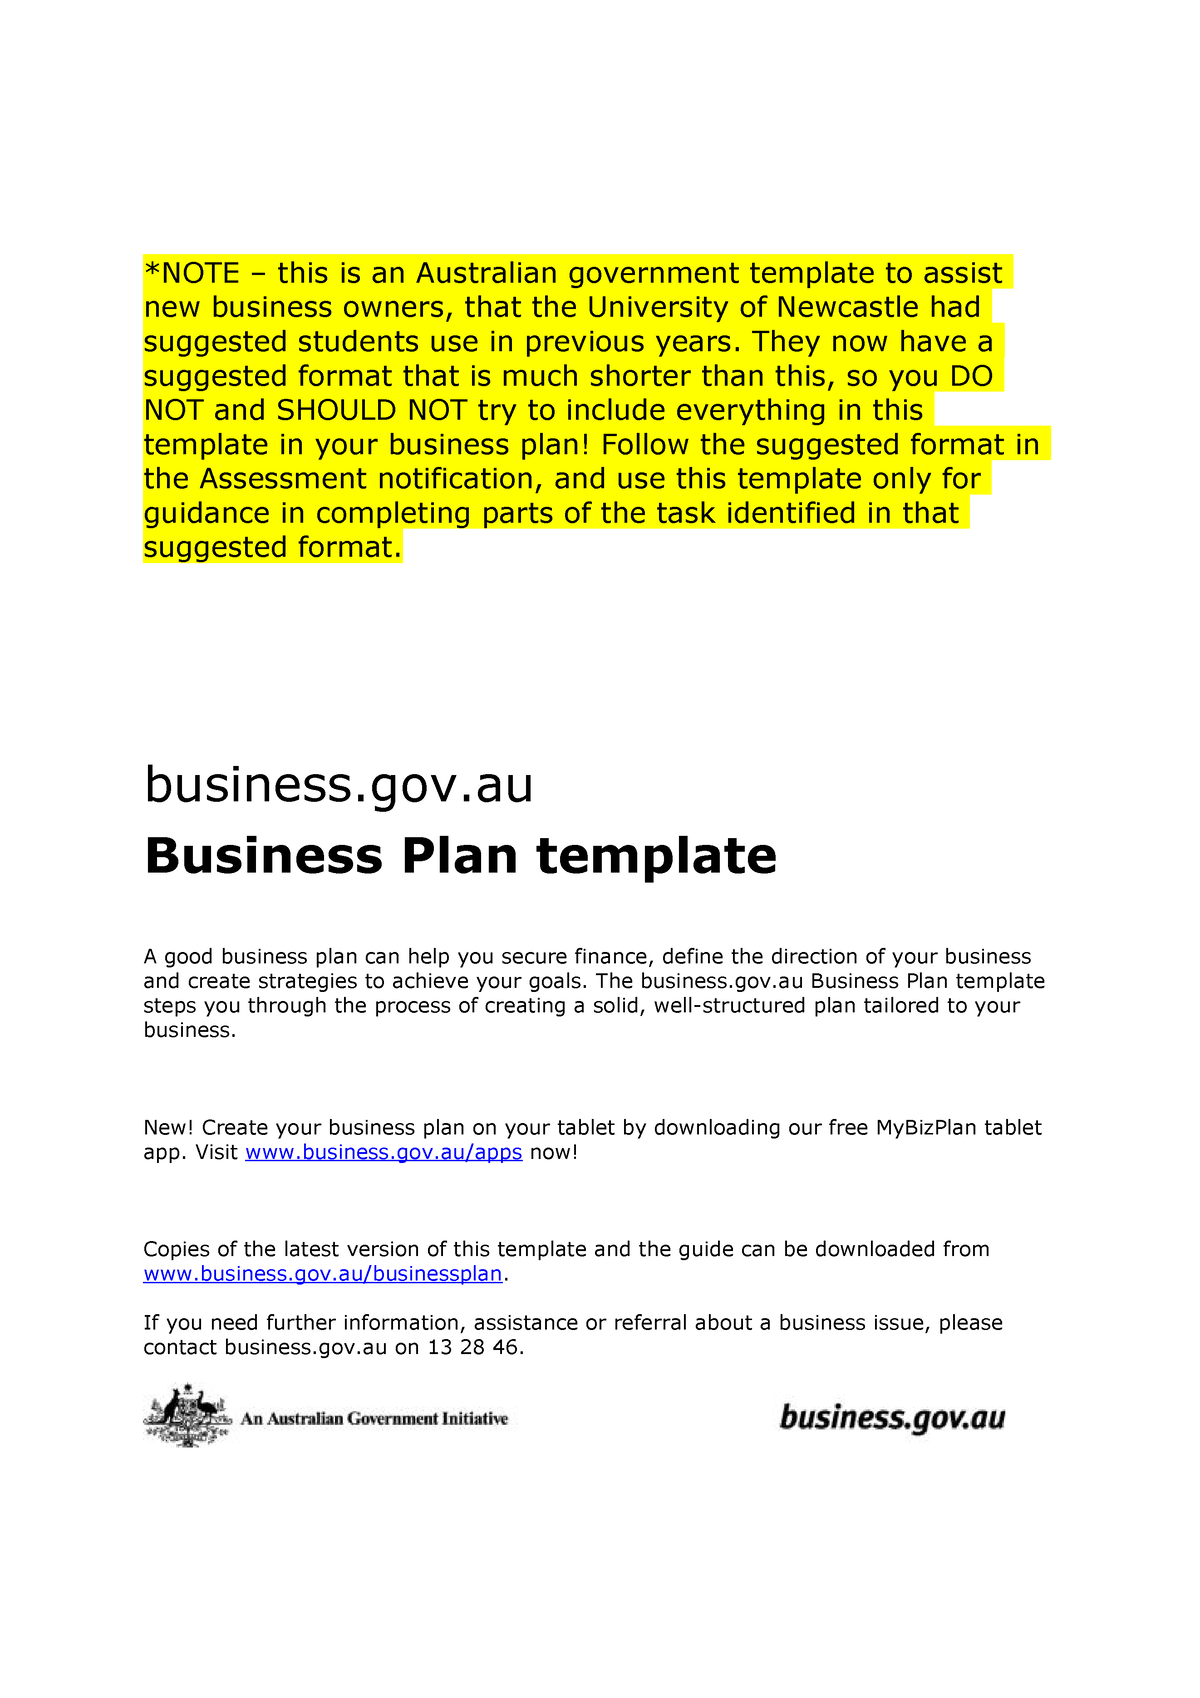 business plan gov au